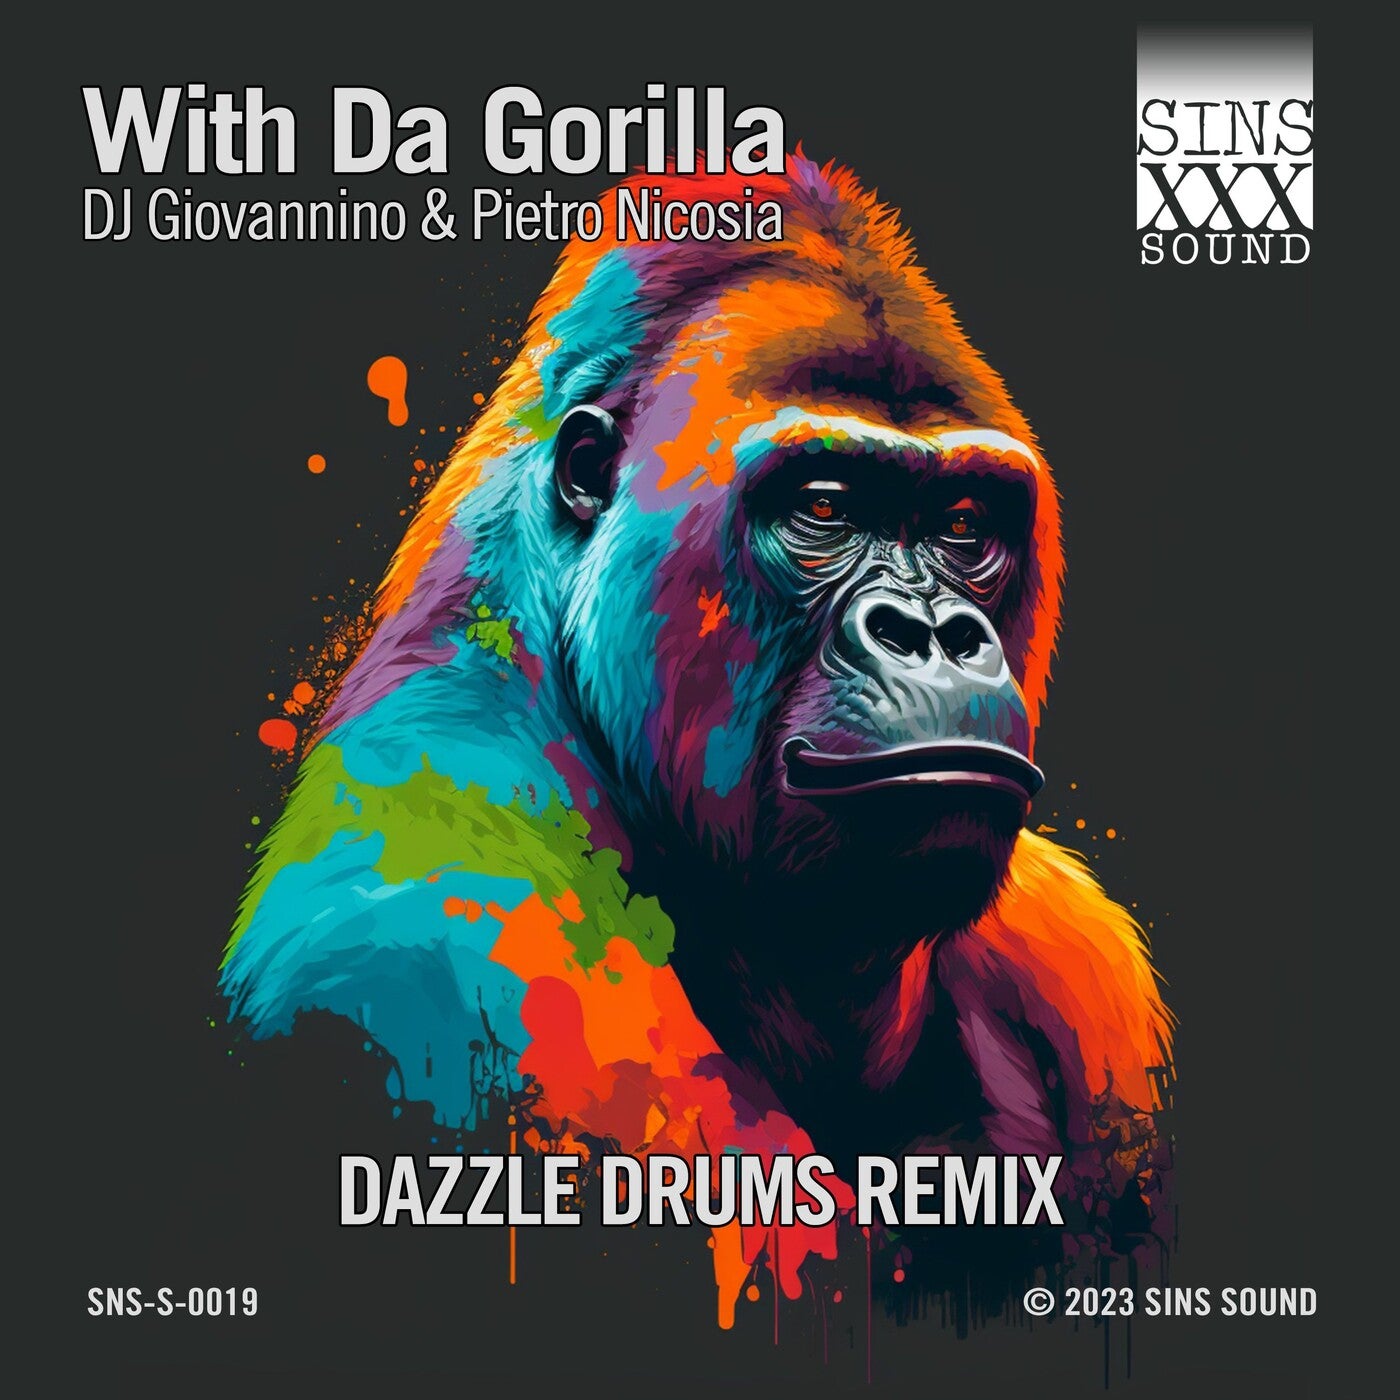 With da Gorilla (Dazzle Drums Remix)